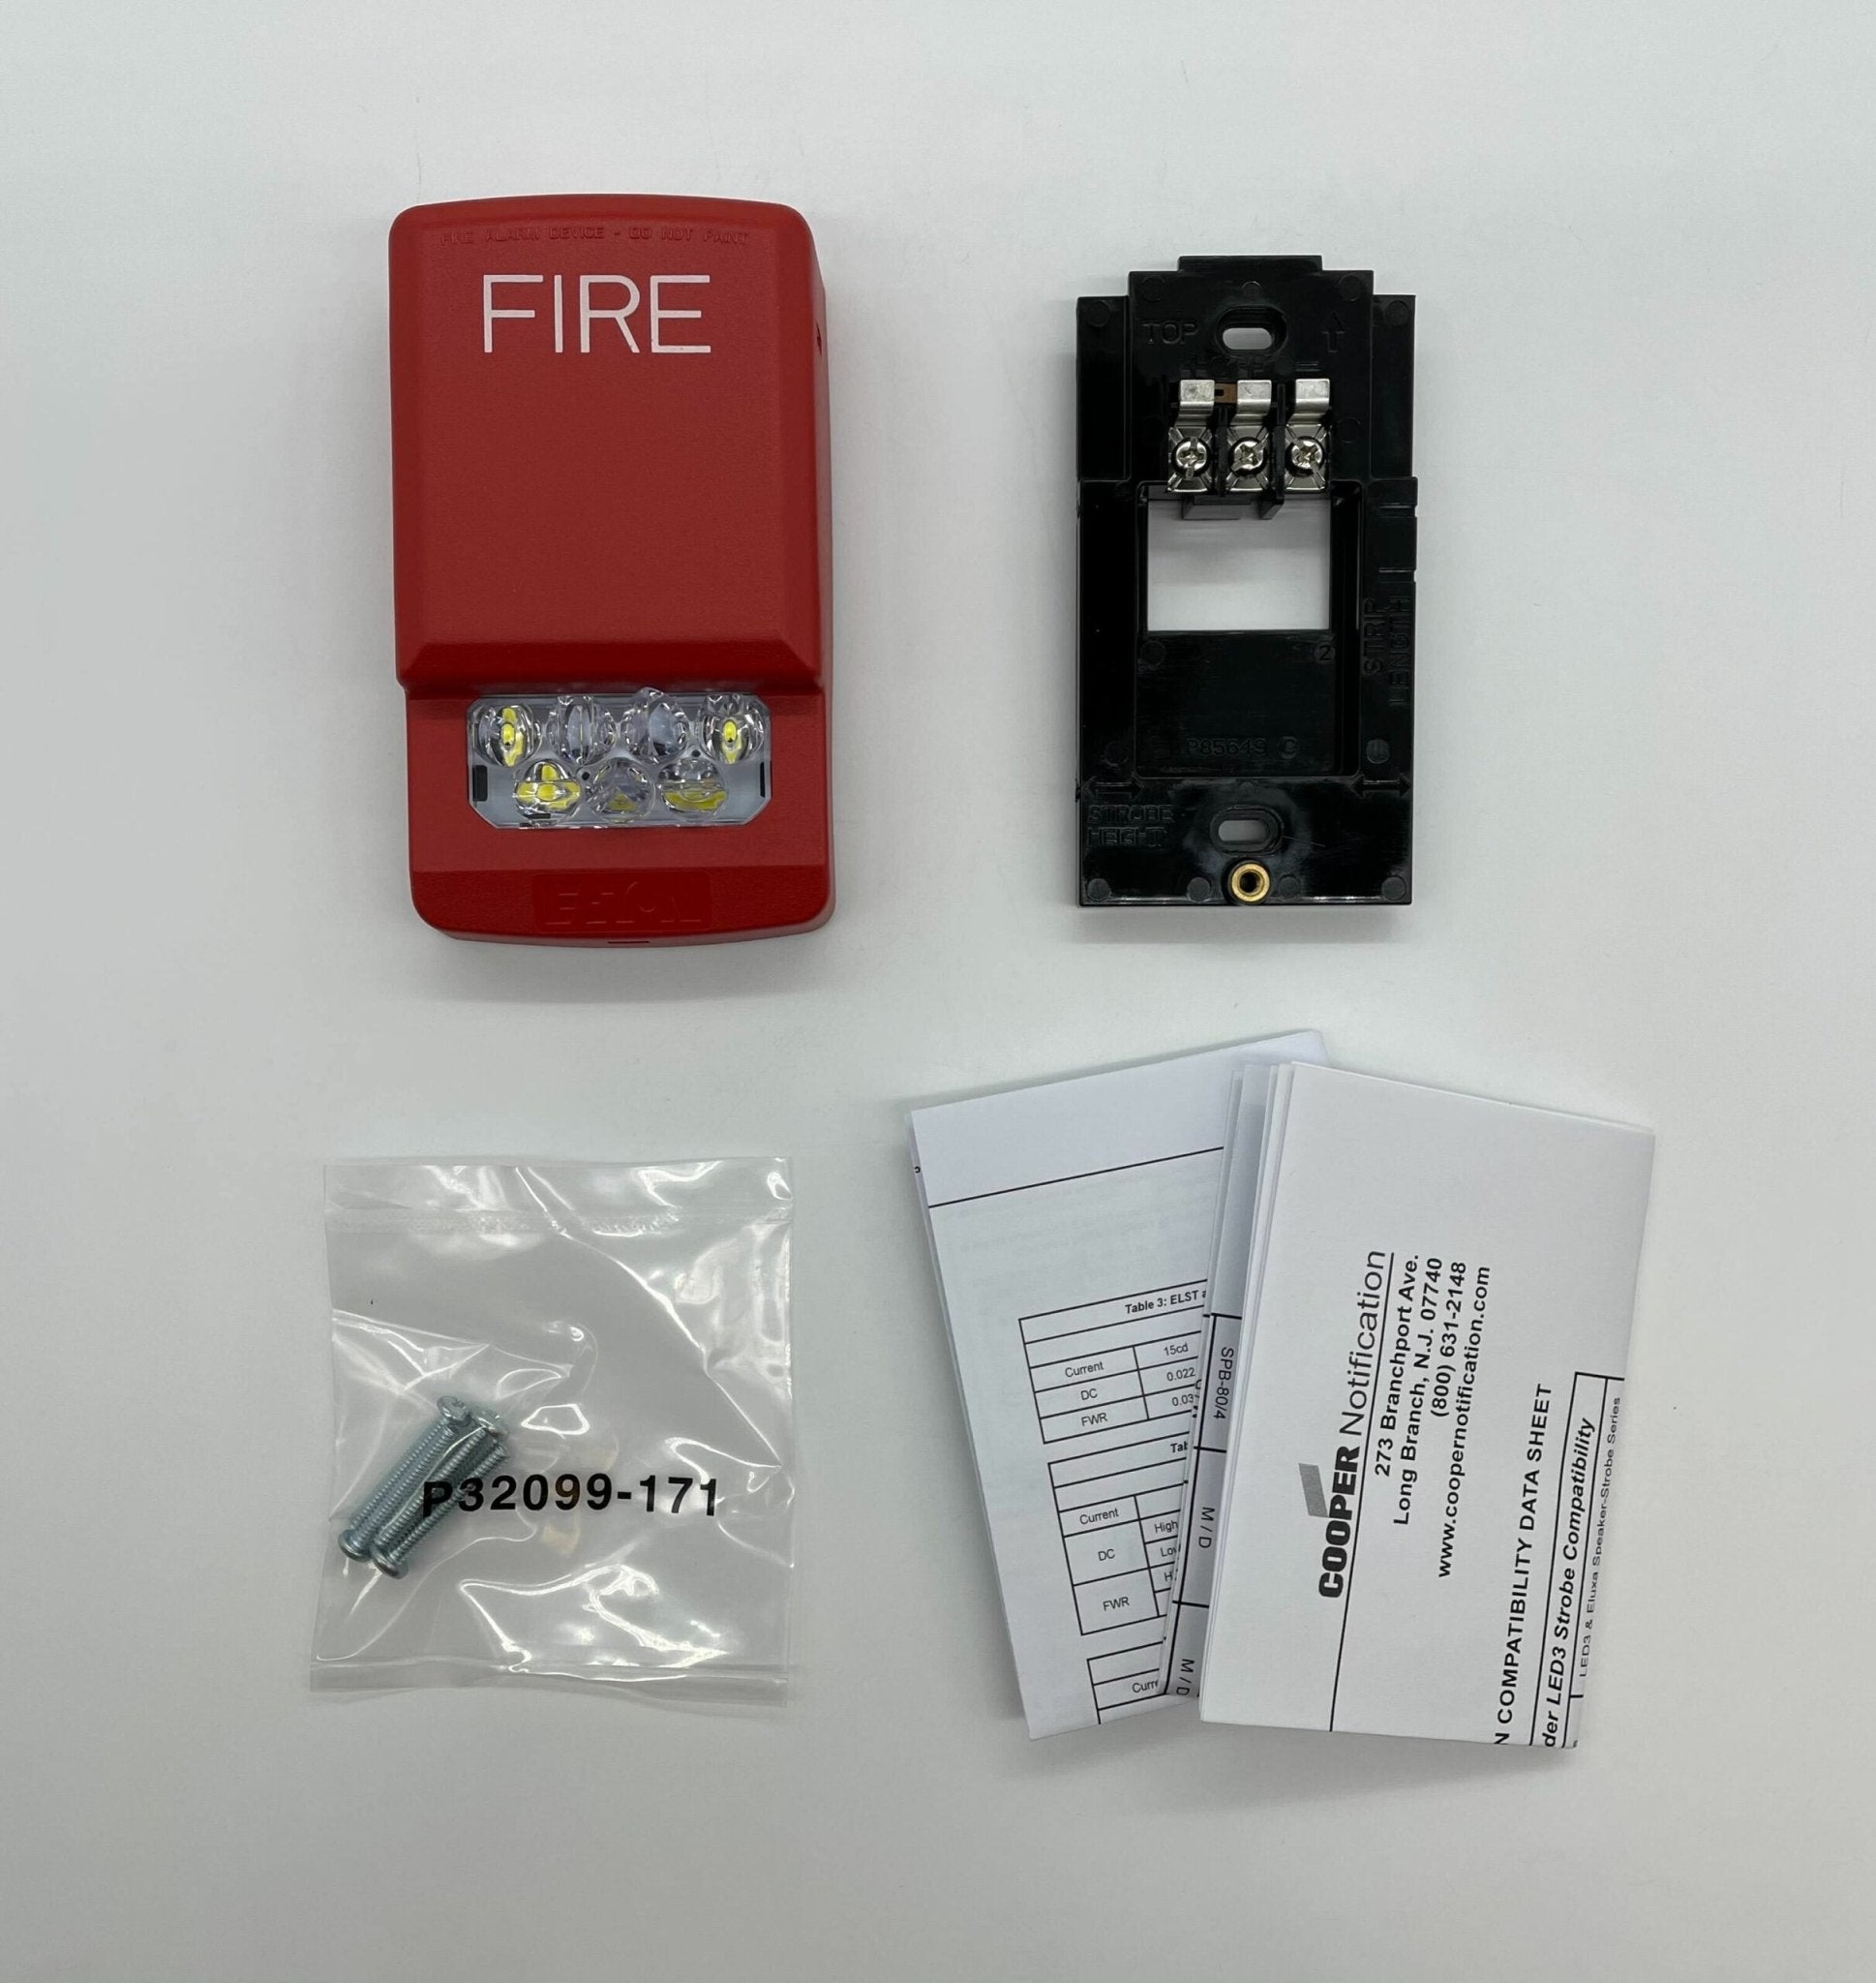 Wheelock ELSTR - The Fire Alarm Supplier